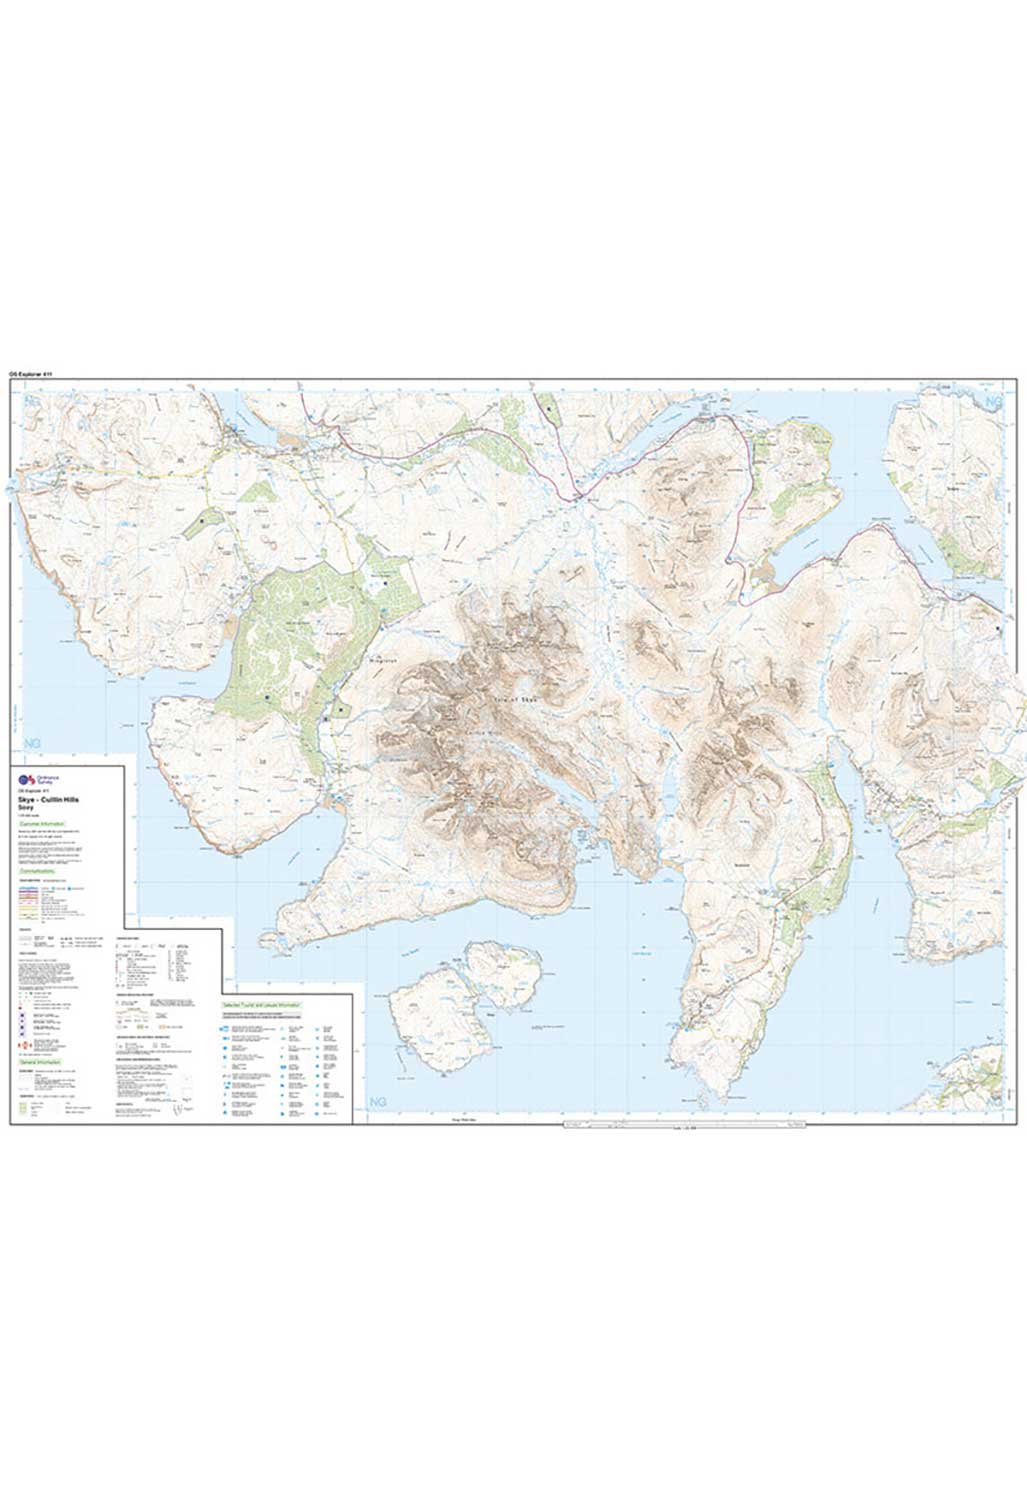 Ordnance Survey Skye - Cuillin Hills - OS Explorer Active 411 Map